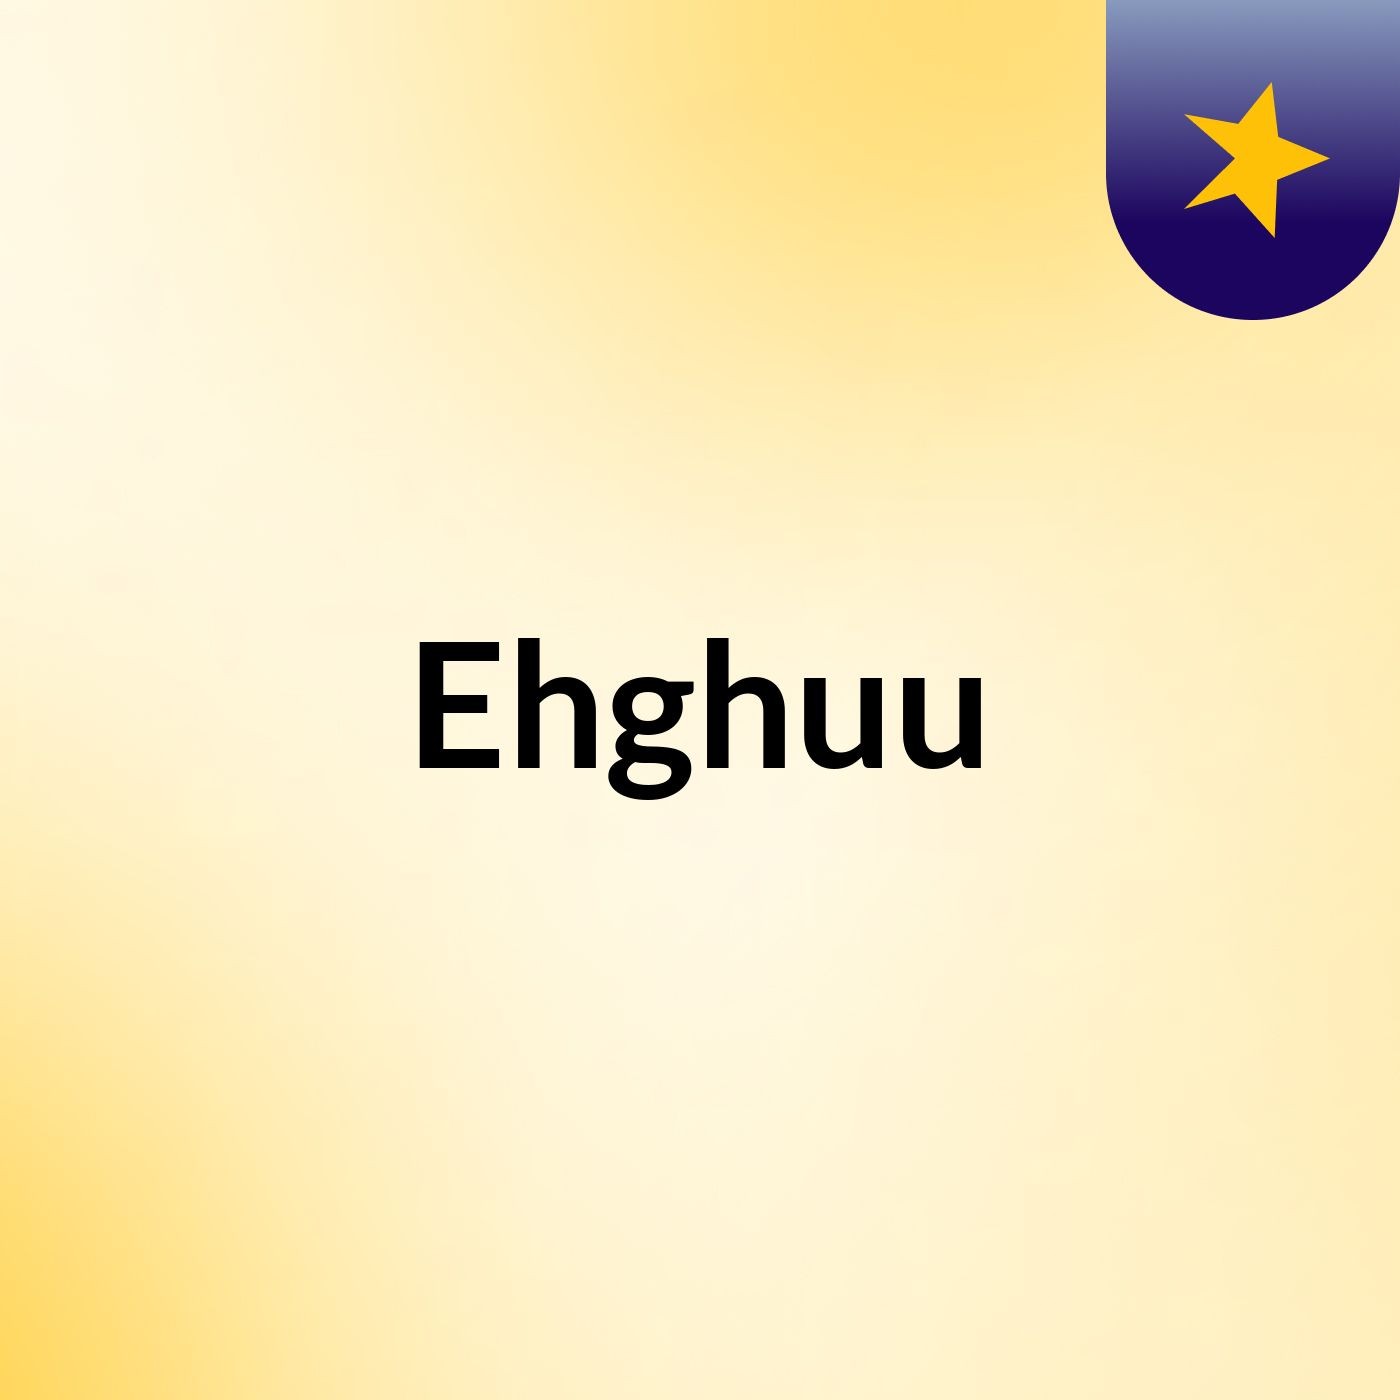 Ehghuu